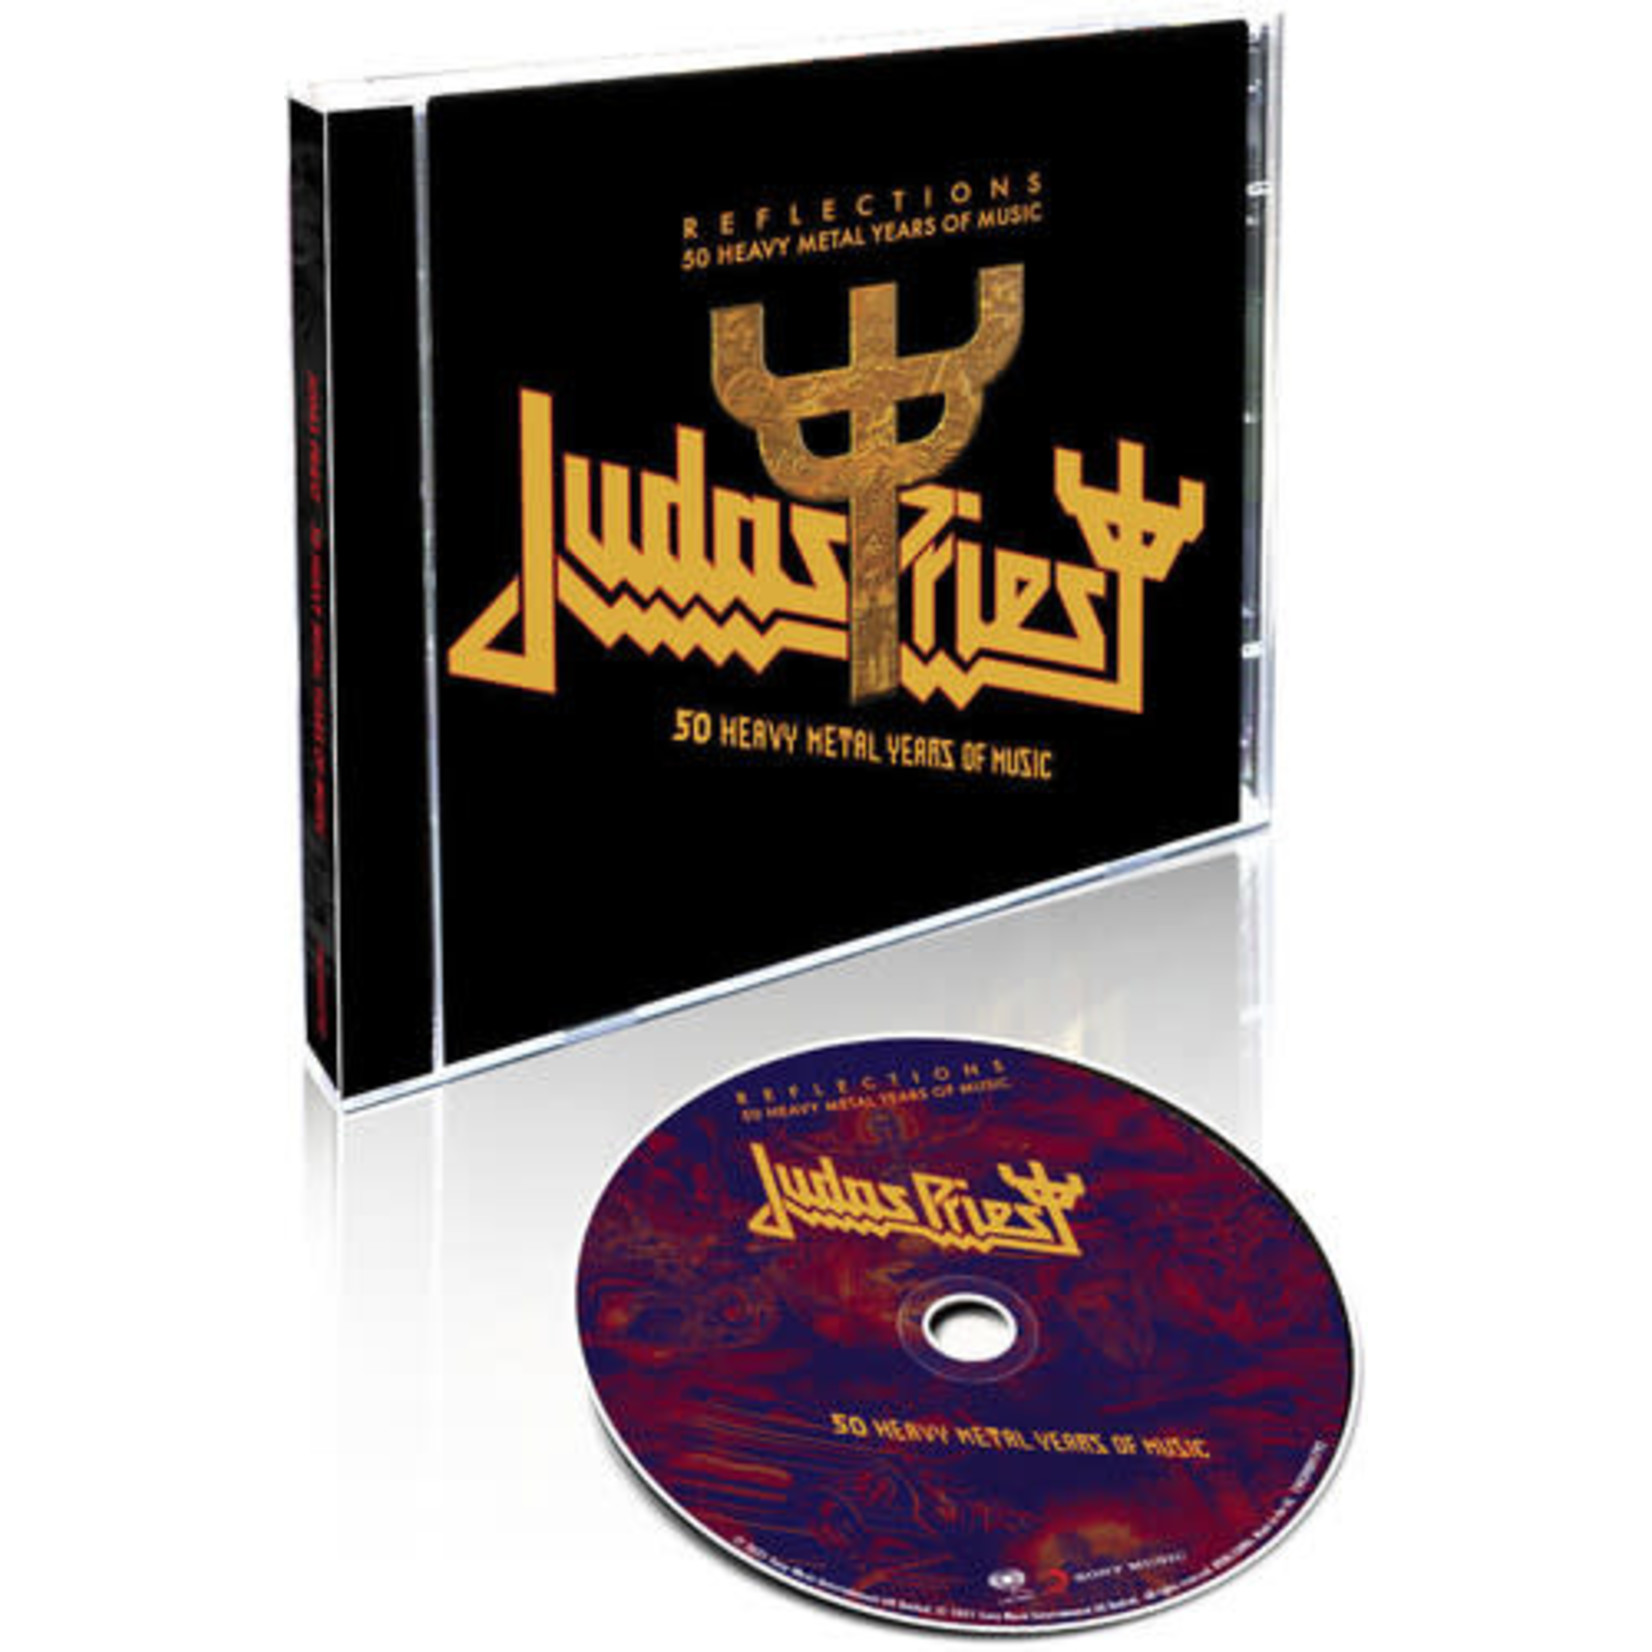 Judas Priest - Reflections: 50 Heavy Metal Years Of Music [CD]